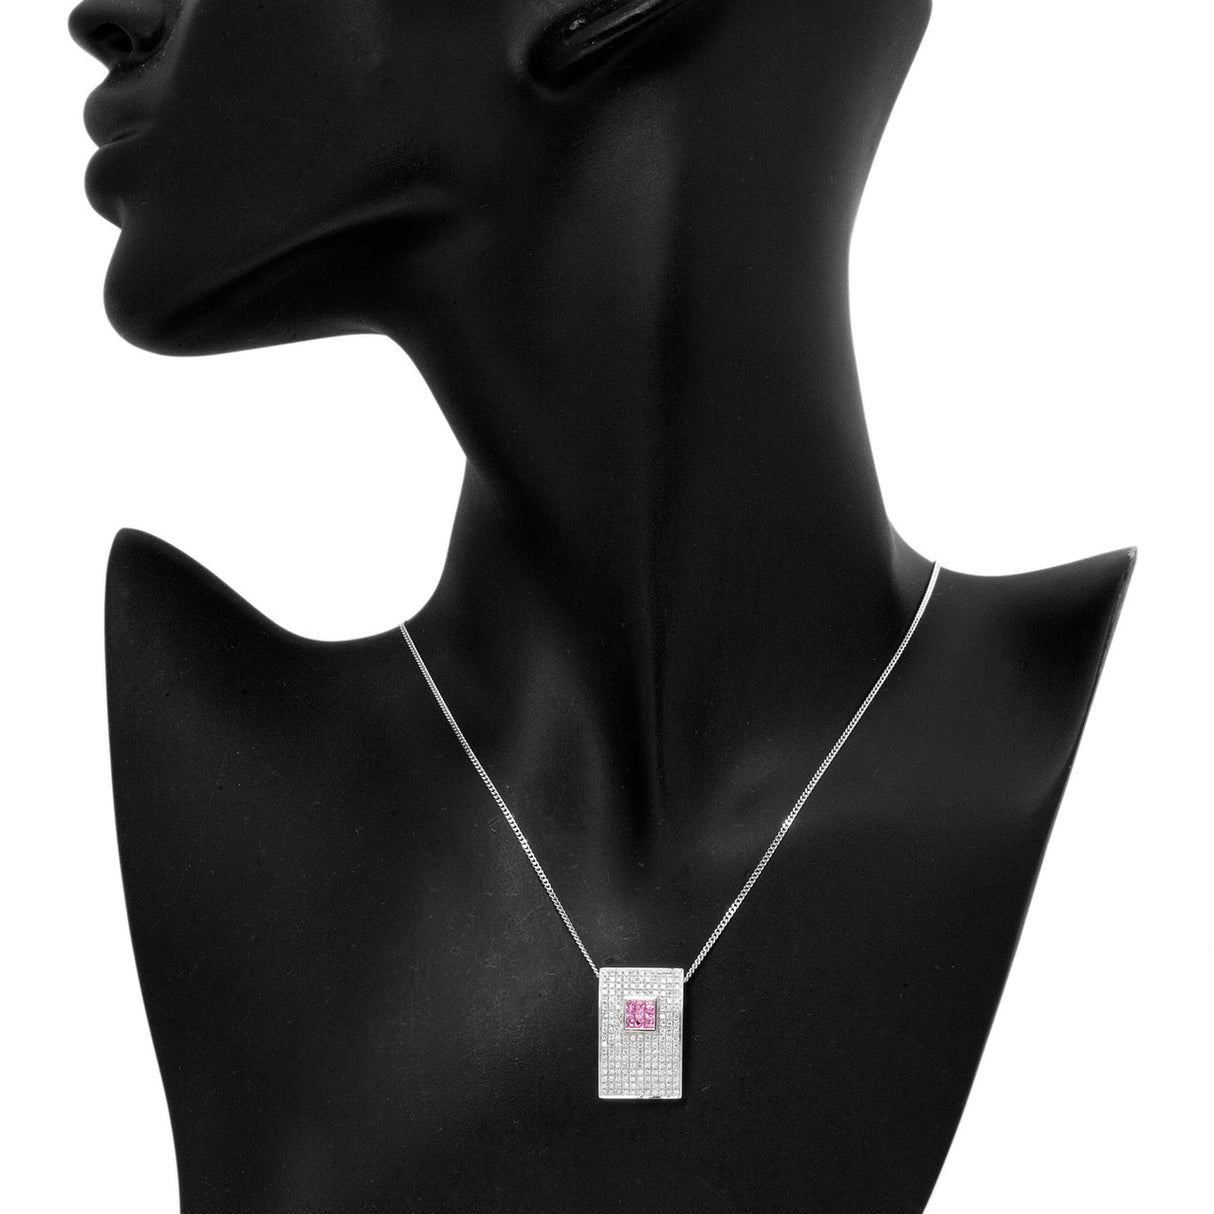 18K White Gold Diamond Pink Sapphire Pendant Necklace